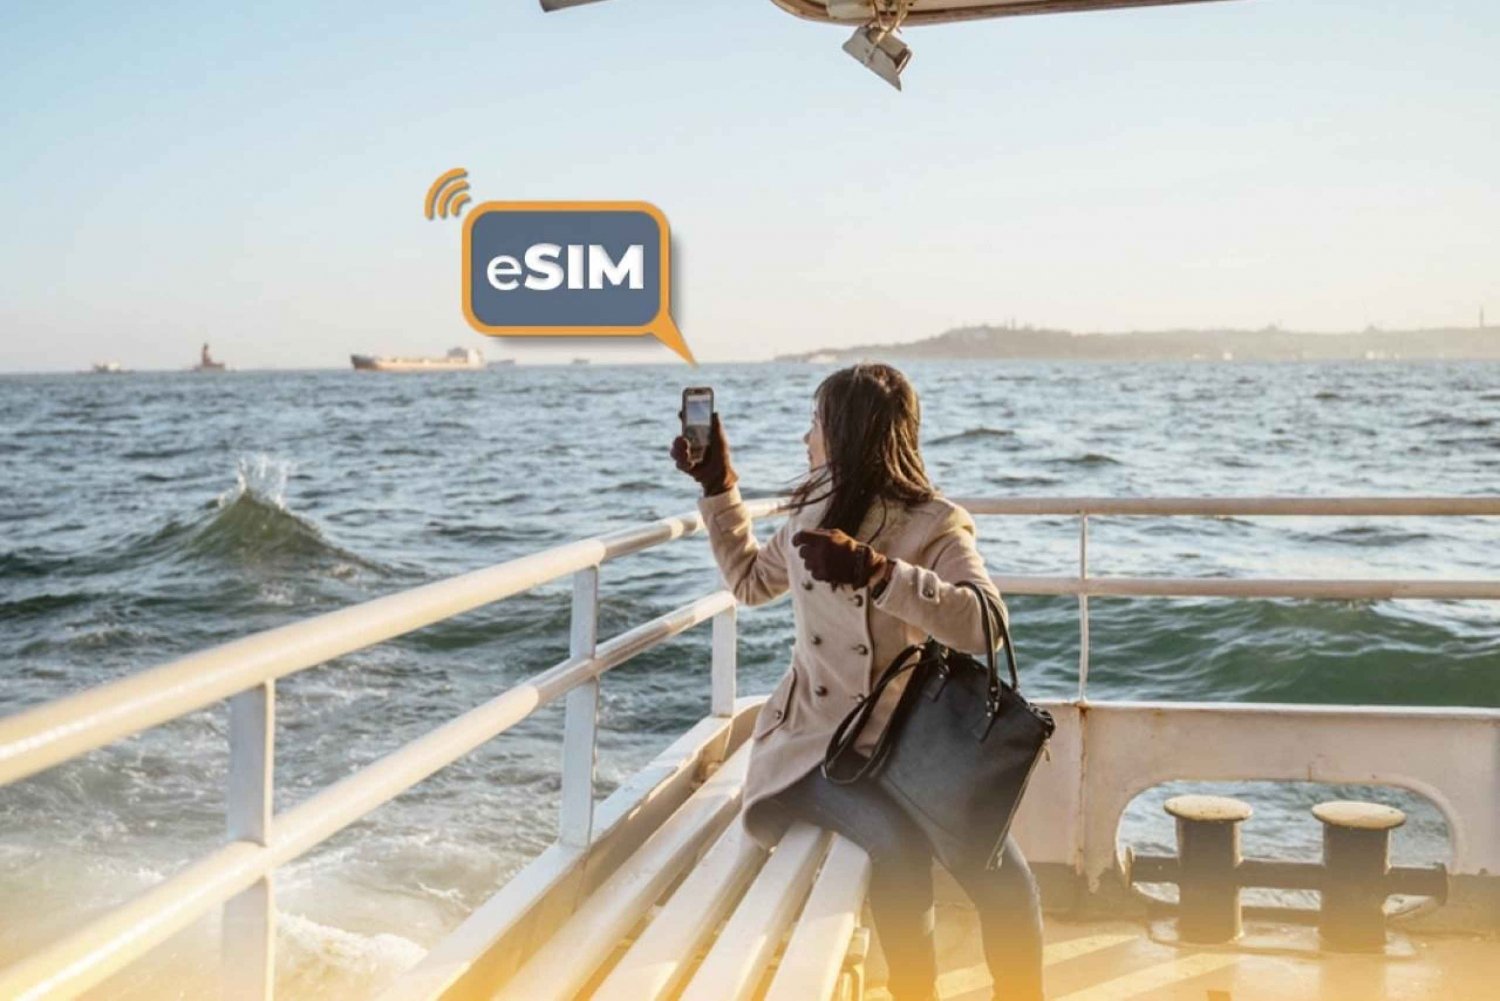 Bodrum / Turkey: Roaming Internet with eSIM Mobile Data